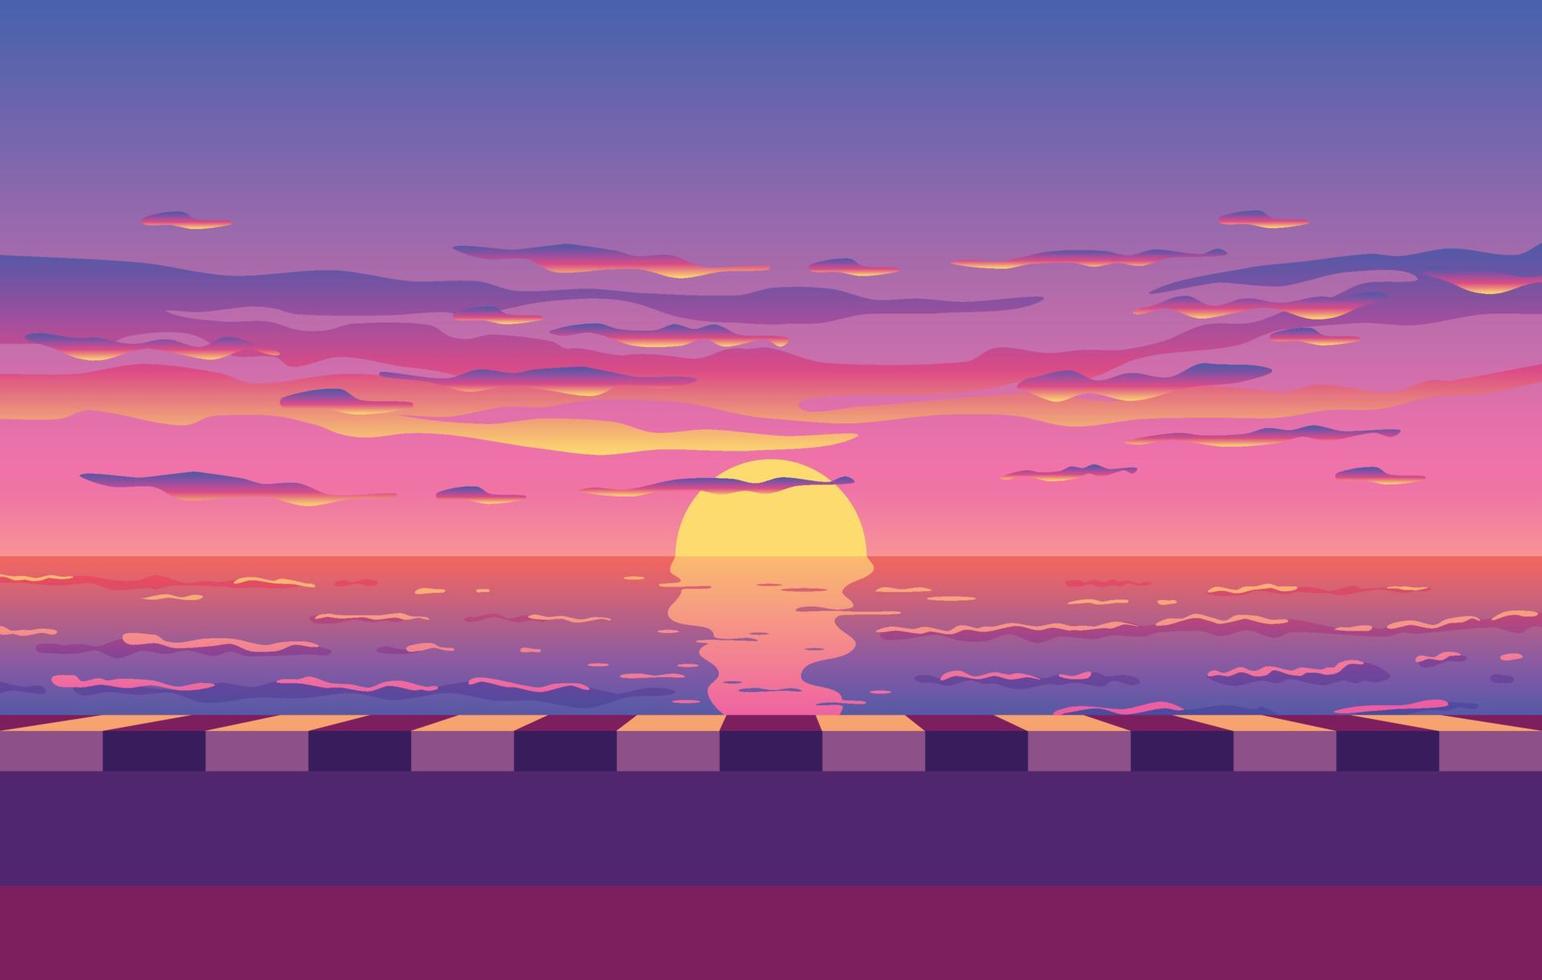 Sunset Beach Summer Time Landscape Illustration vector